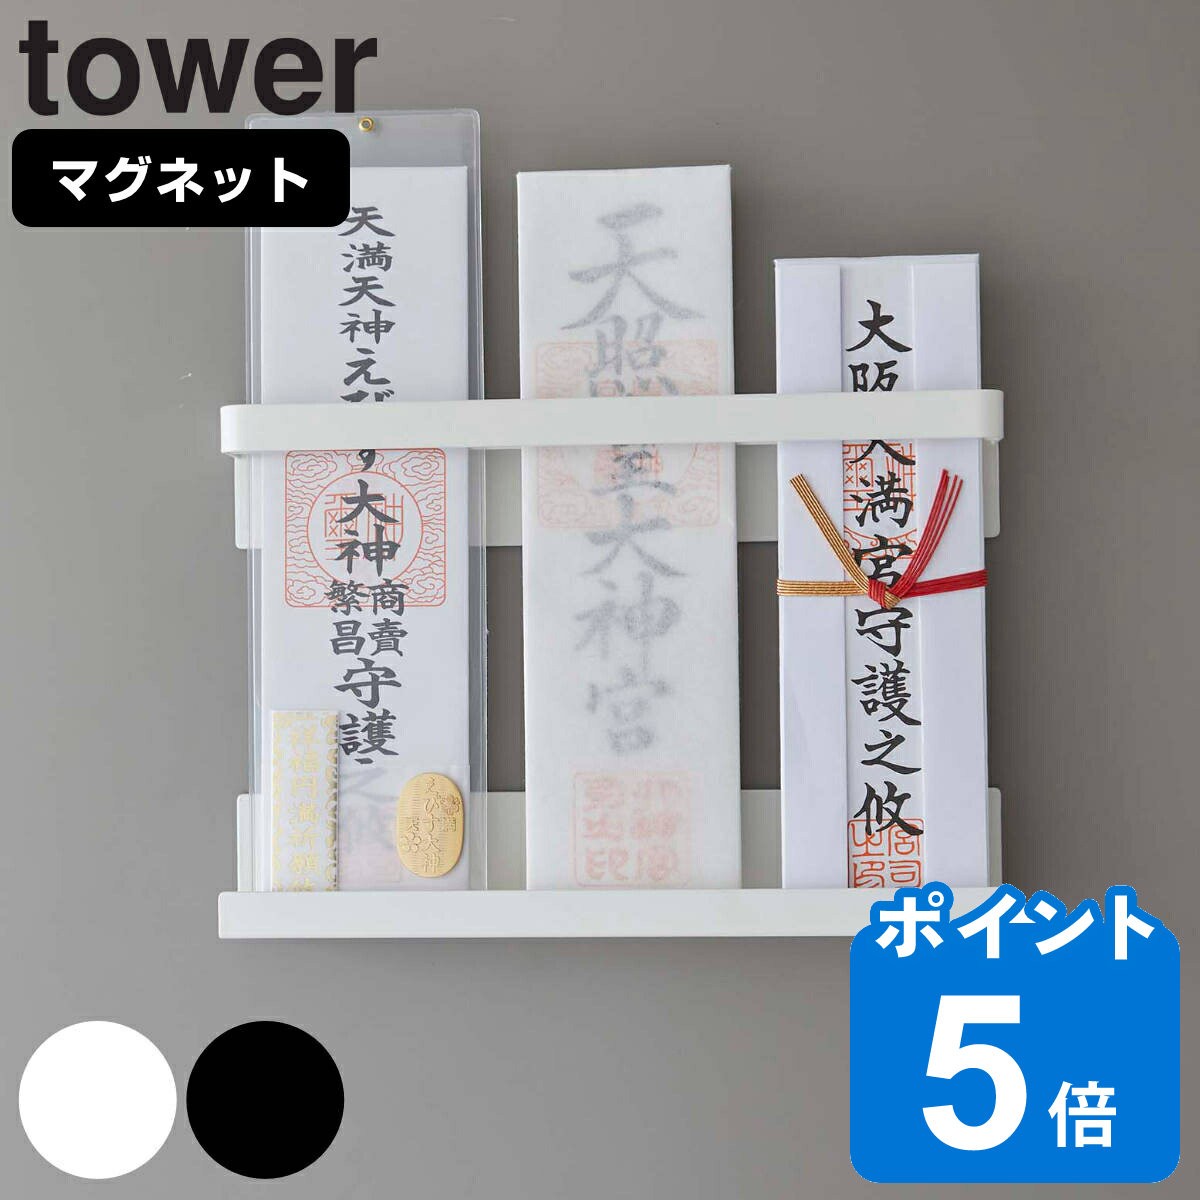 tower }Olbg_Dz_[ ^[